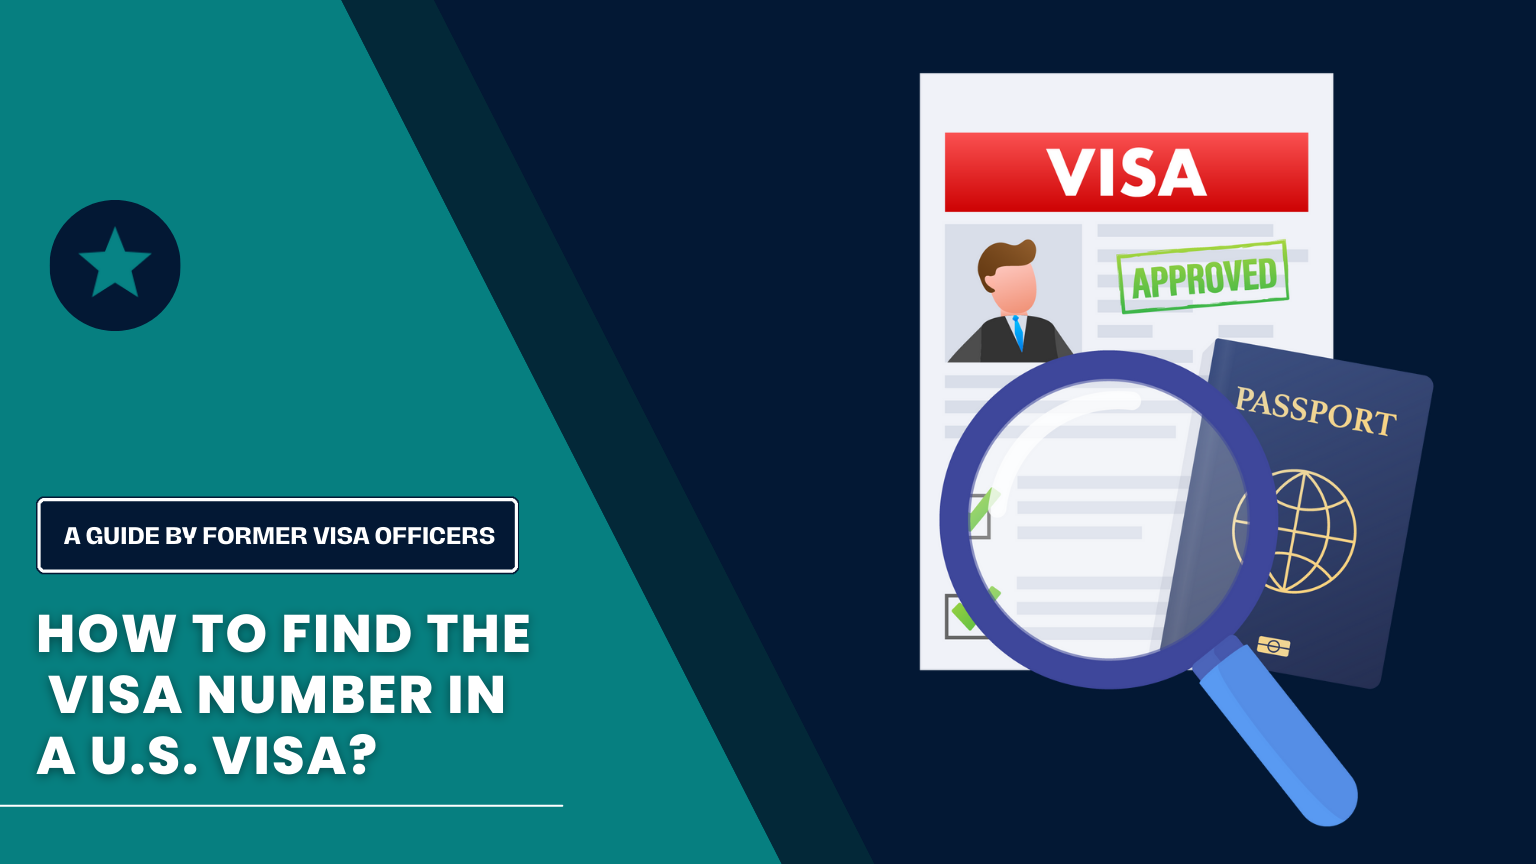 How To Find the Visa Number In a U.S. Visa